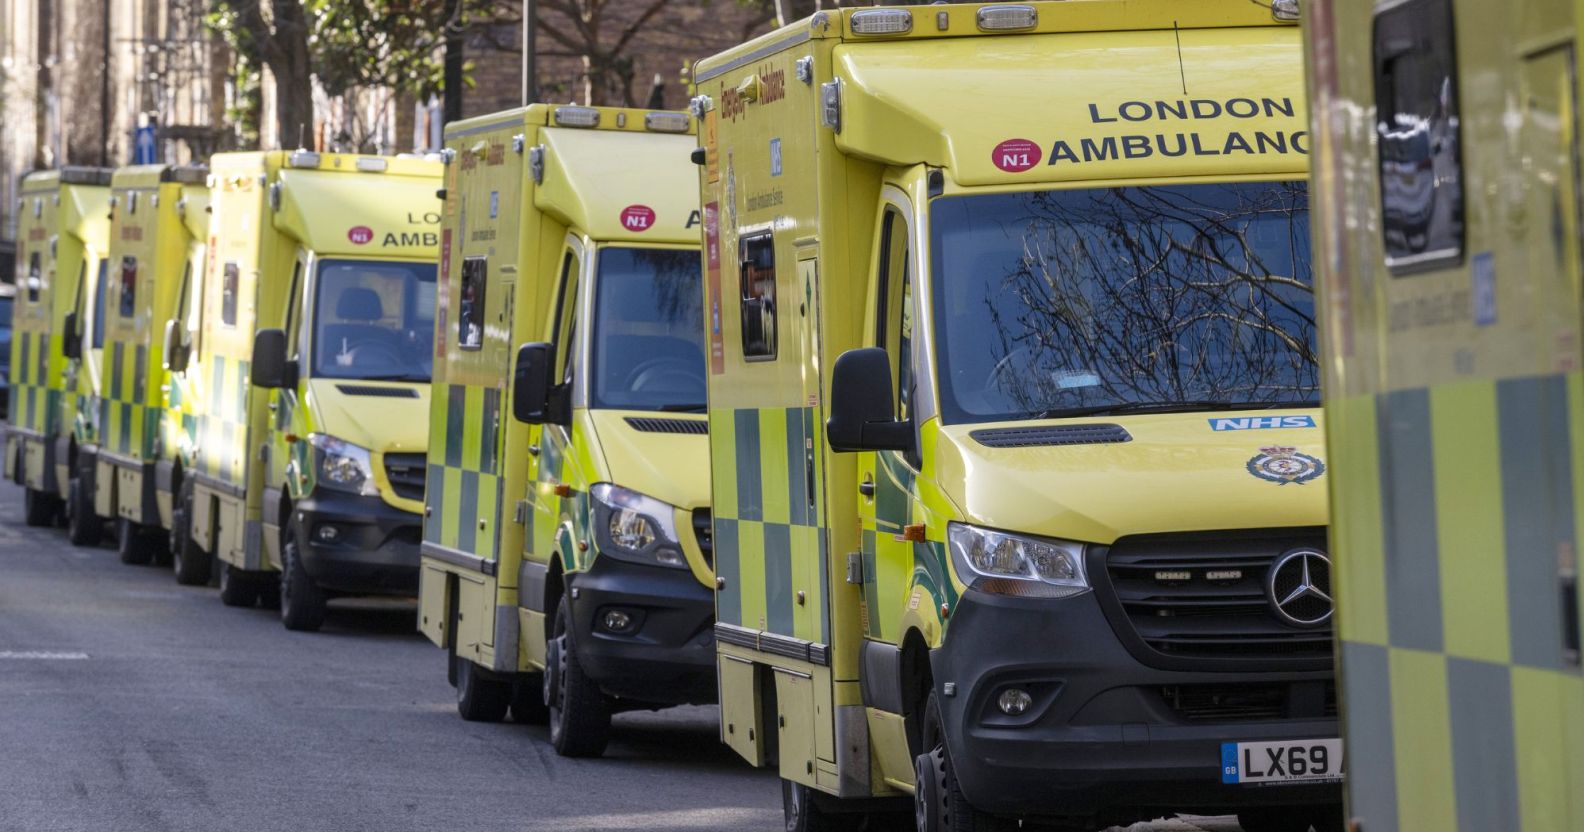 Several ambulances driving through London.